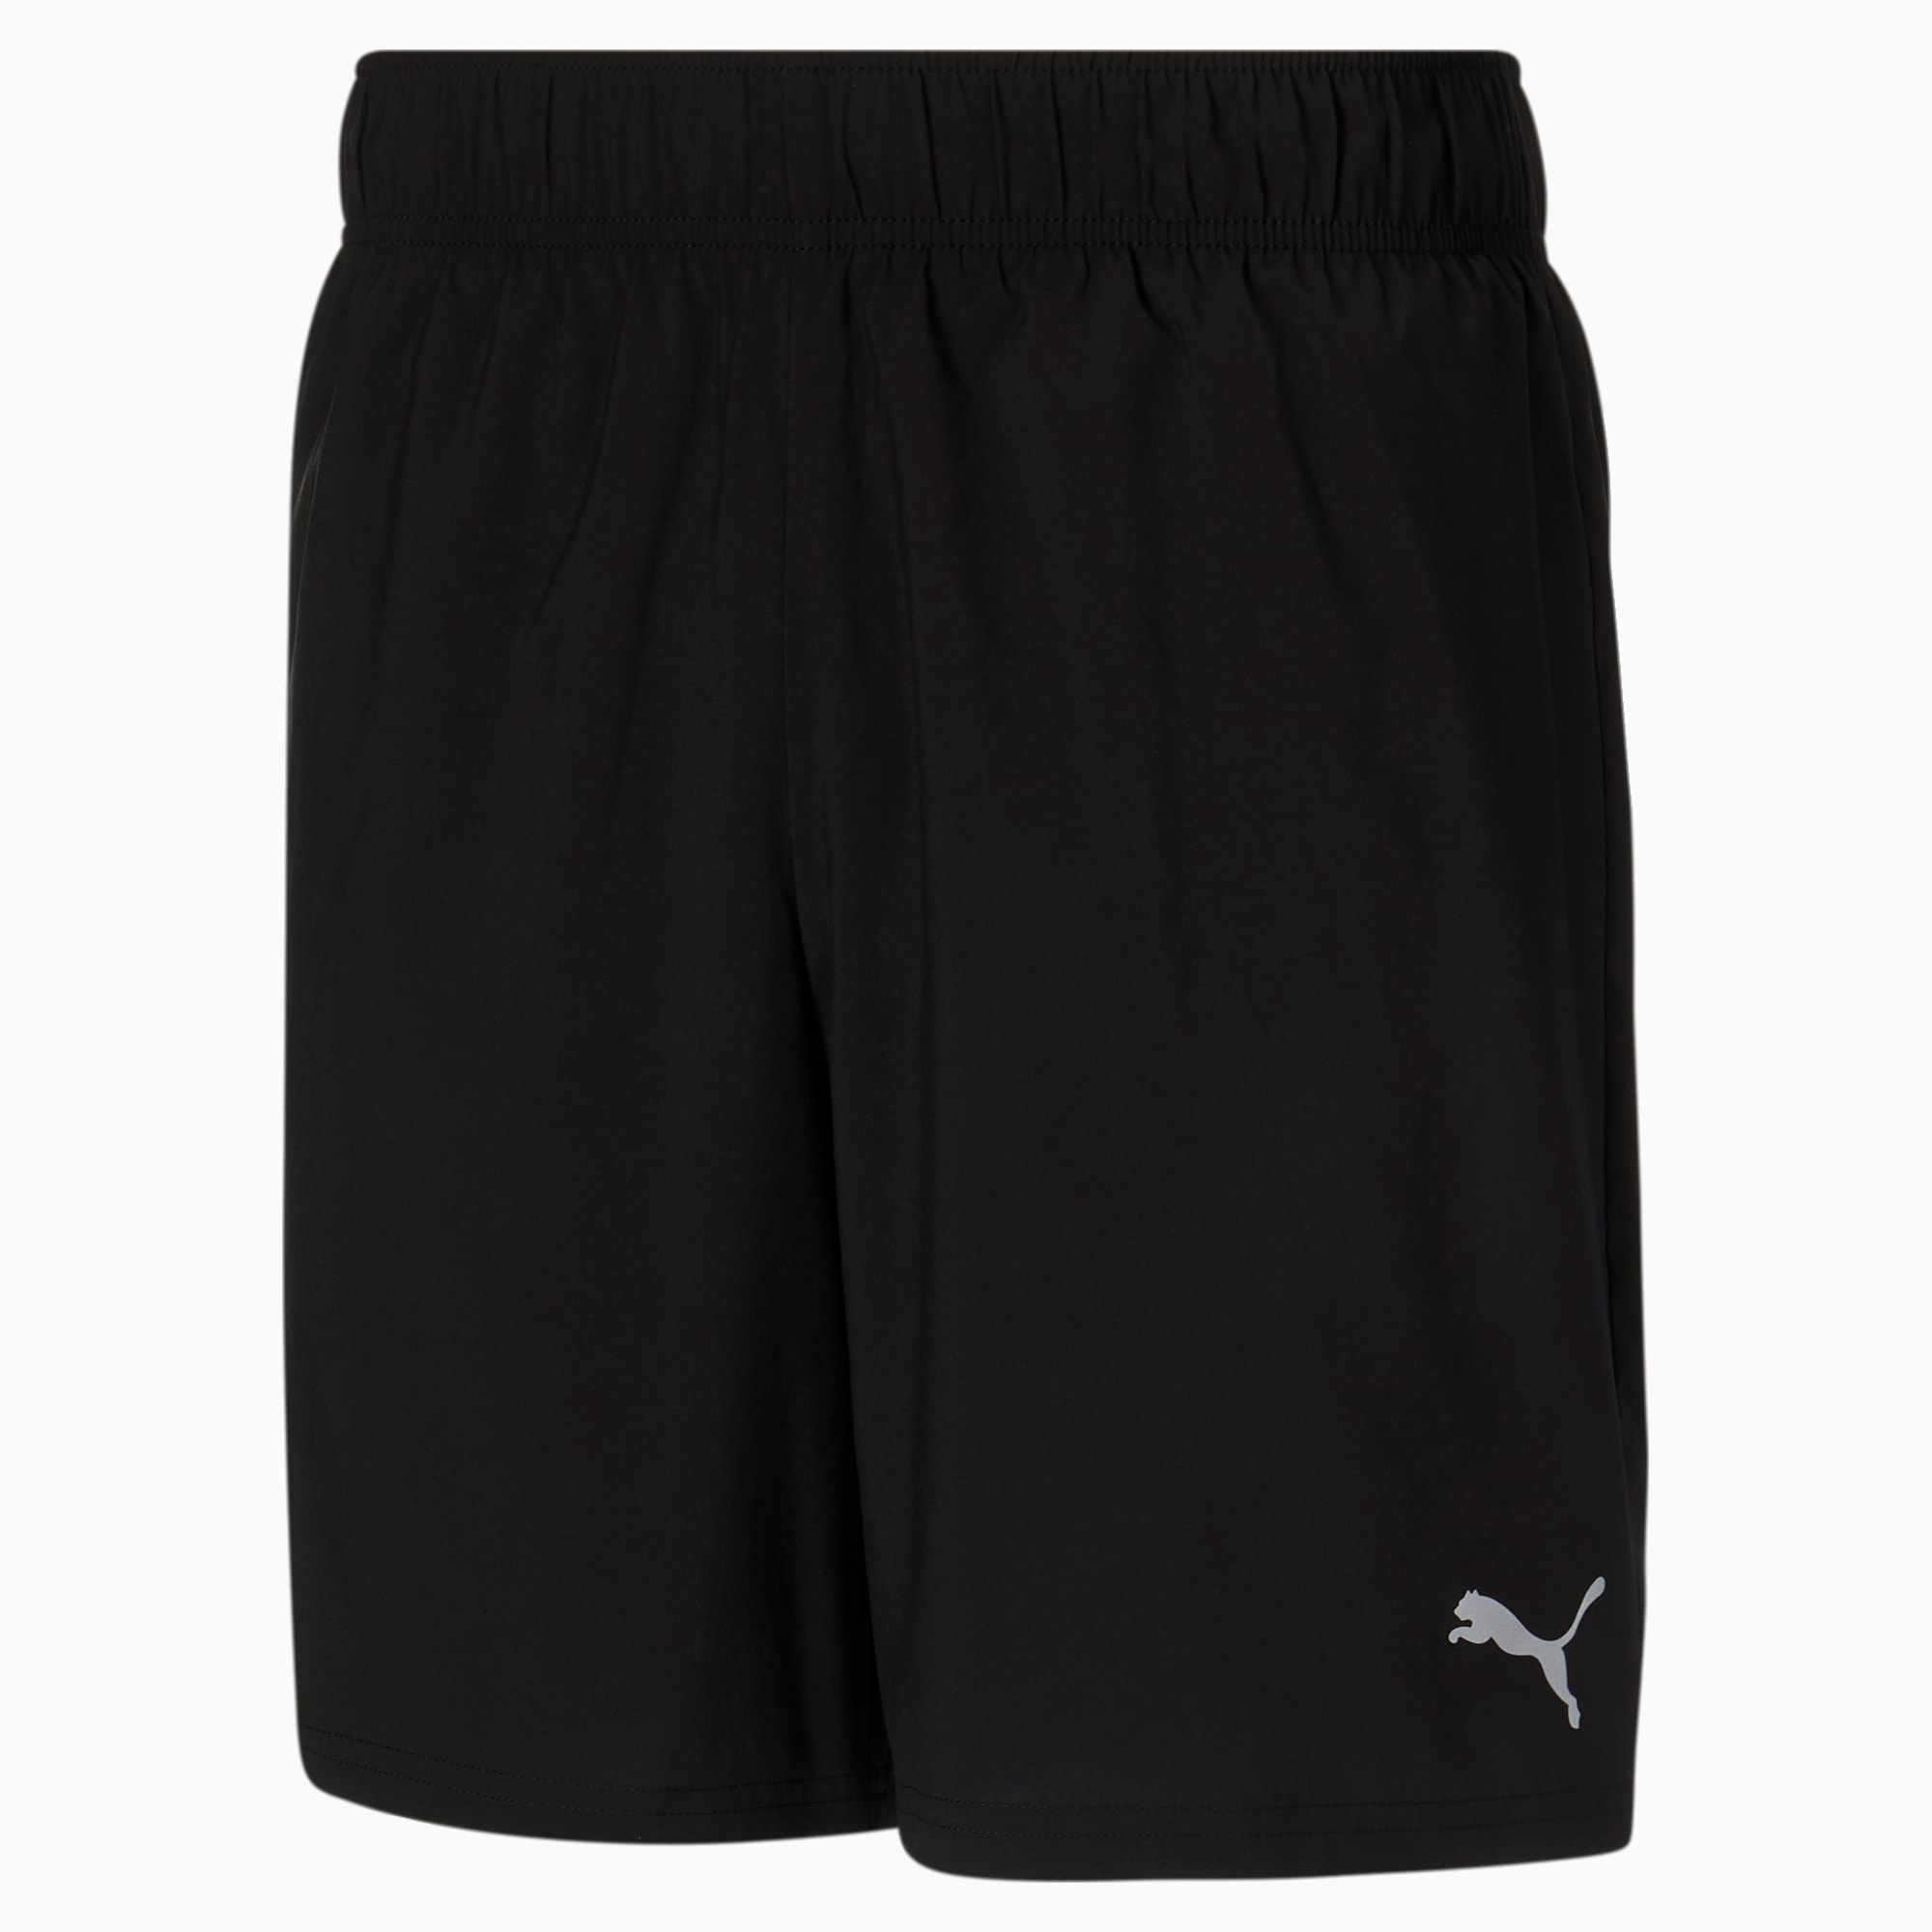 PUMA Favourite 2-in-1 Men's Running Shorts, Black, Size M, Clothing